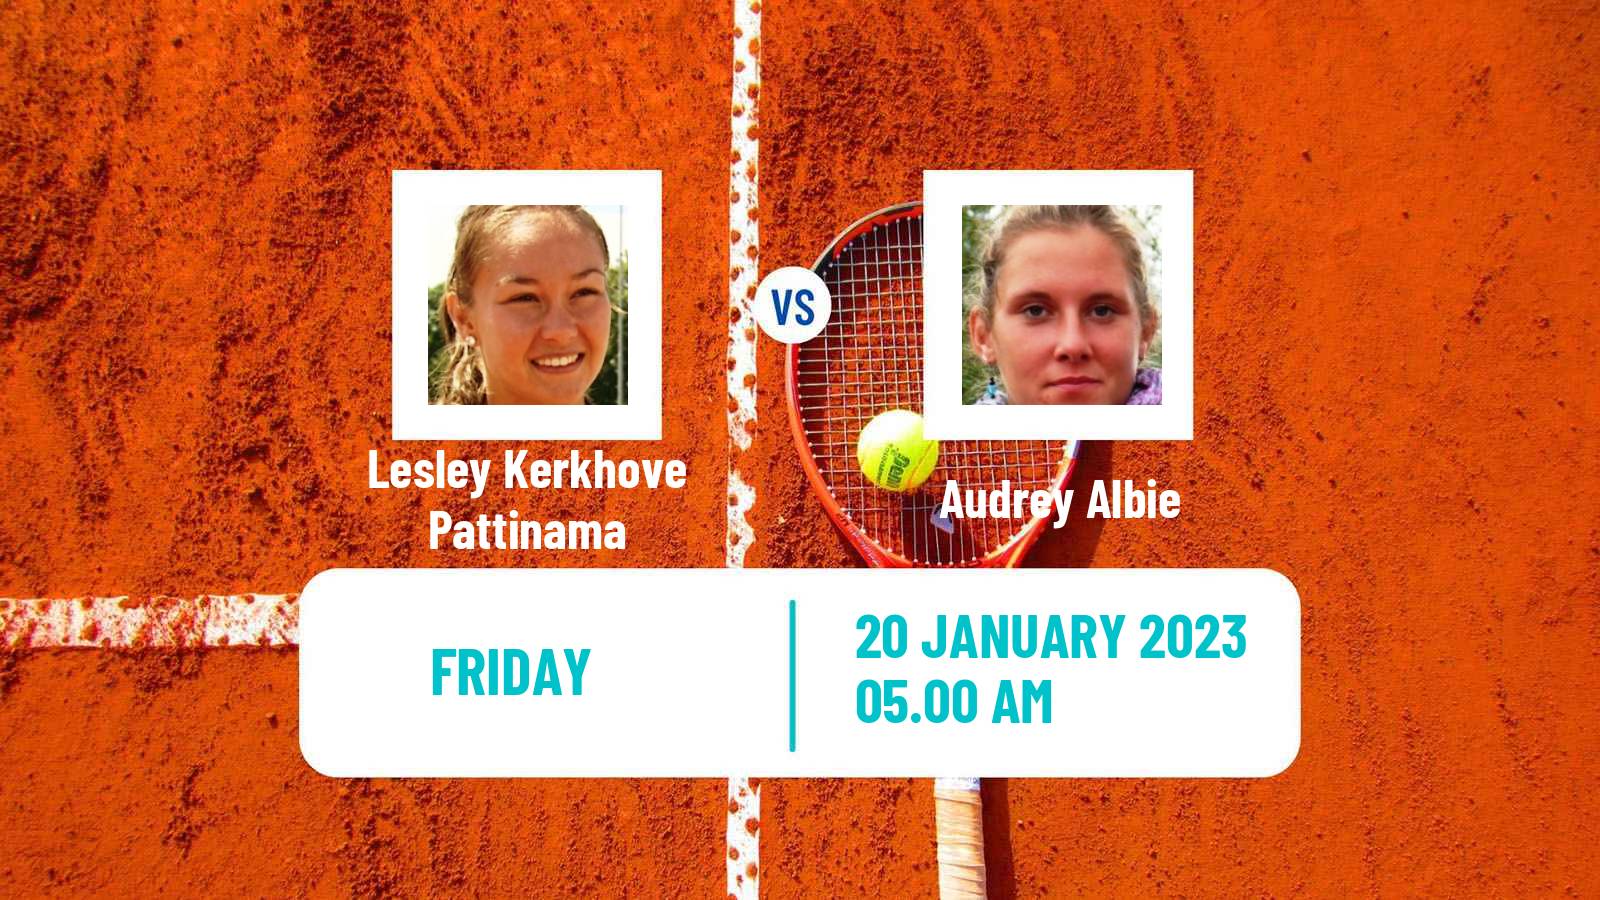 Tennis ITF Tournaments Lesley Kerkhove Pattinama - Audrey Albie